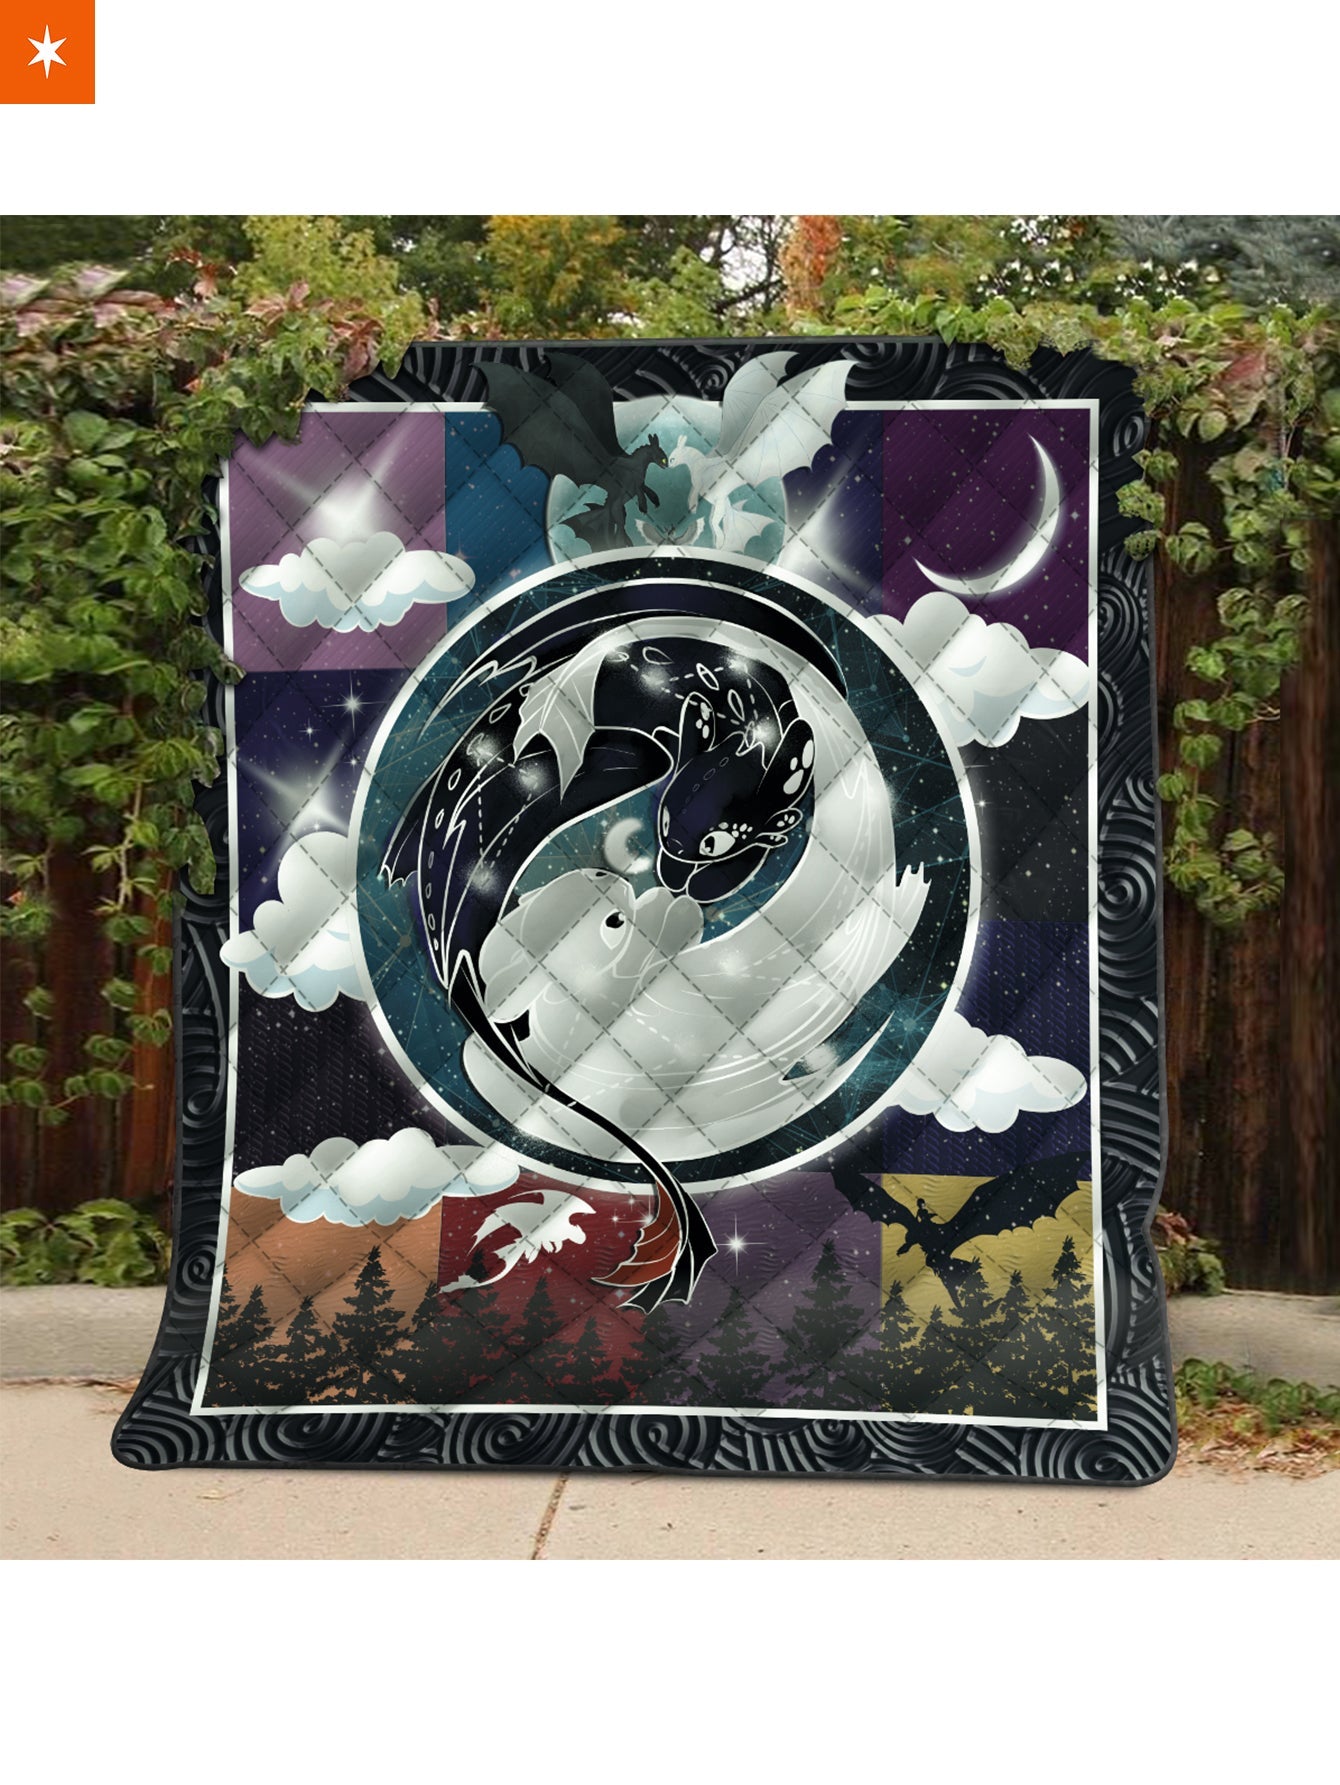 Fandomaniax - Constellation Dragons Quilt Blanket